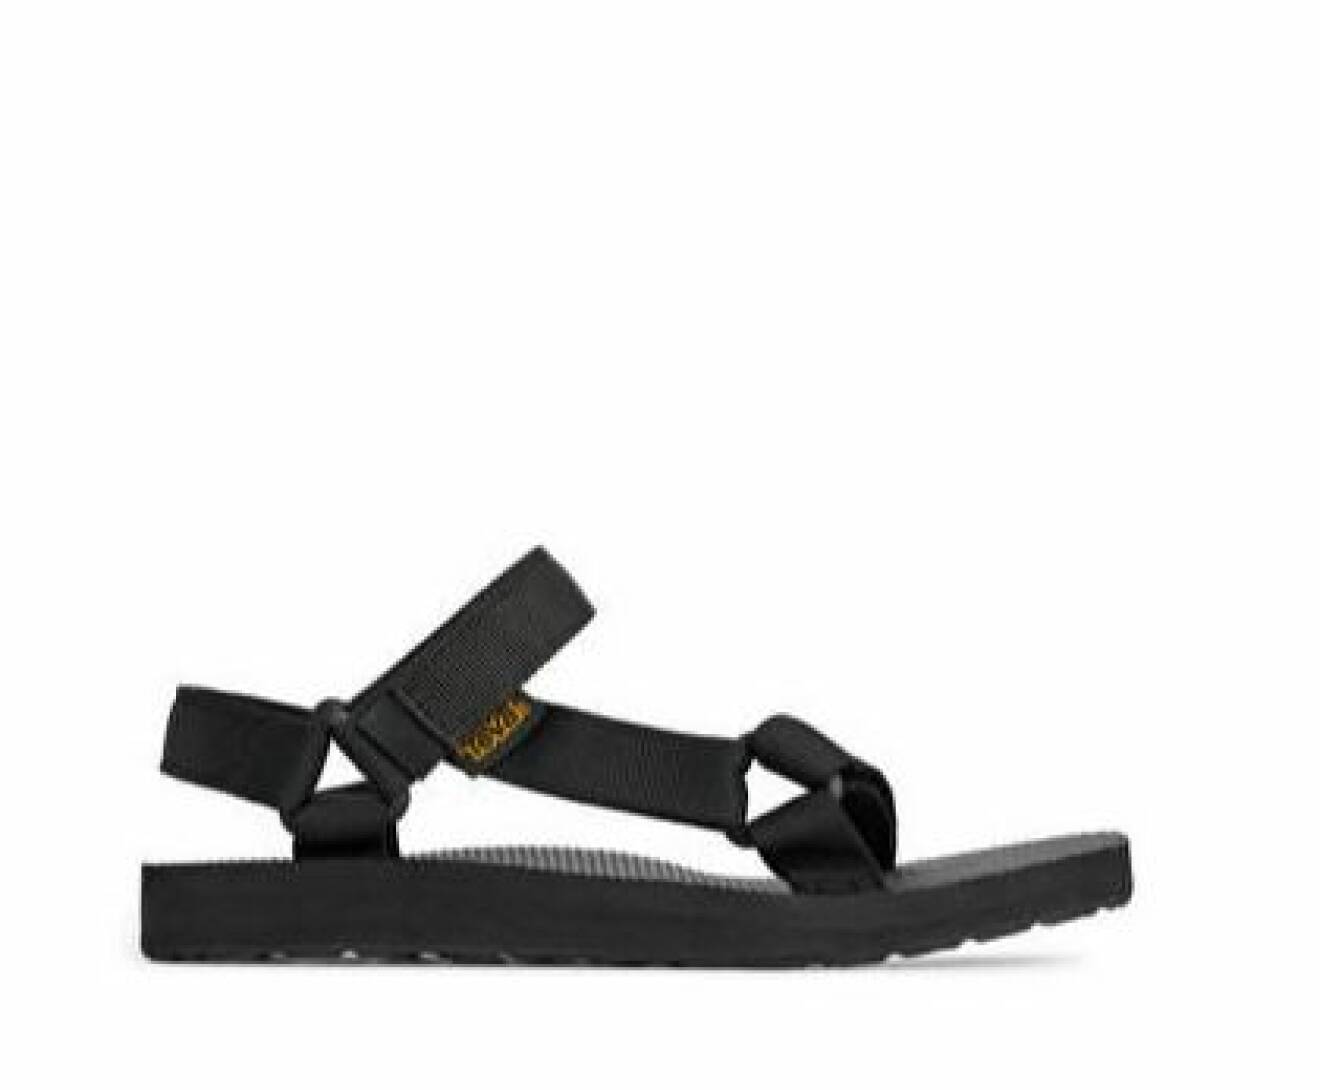 Svarta, sportiga sandaler med kardborreband. Sandaler från Teva.